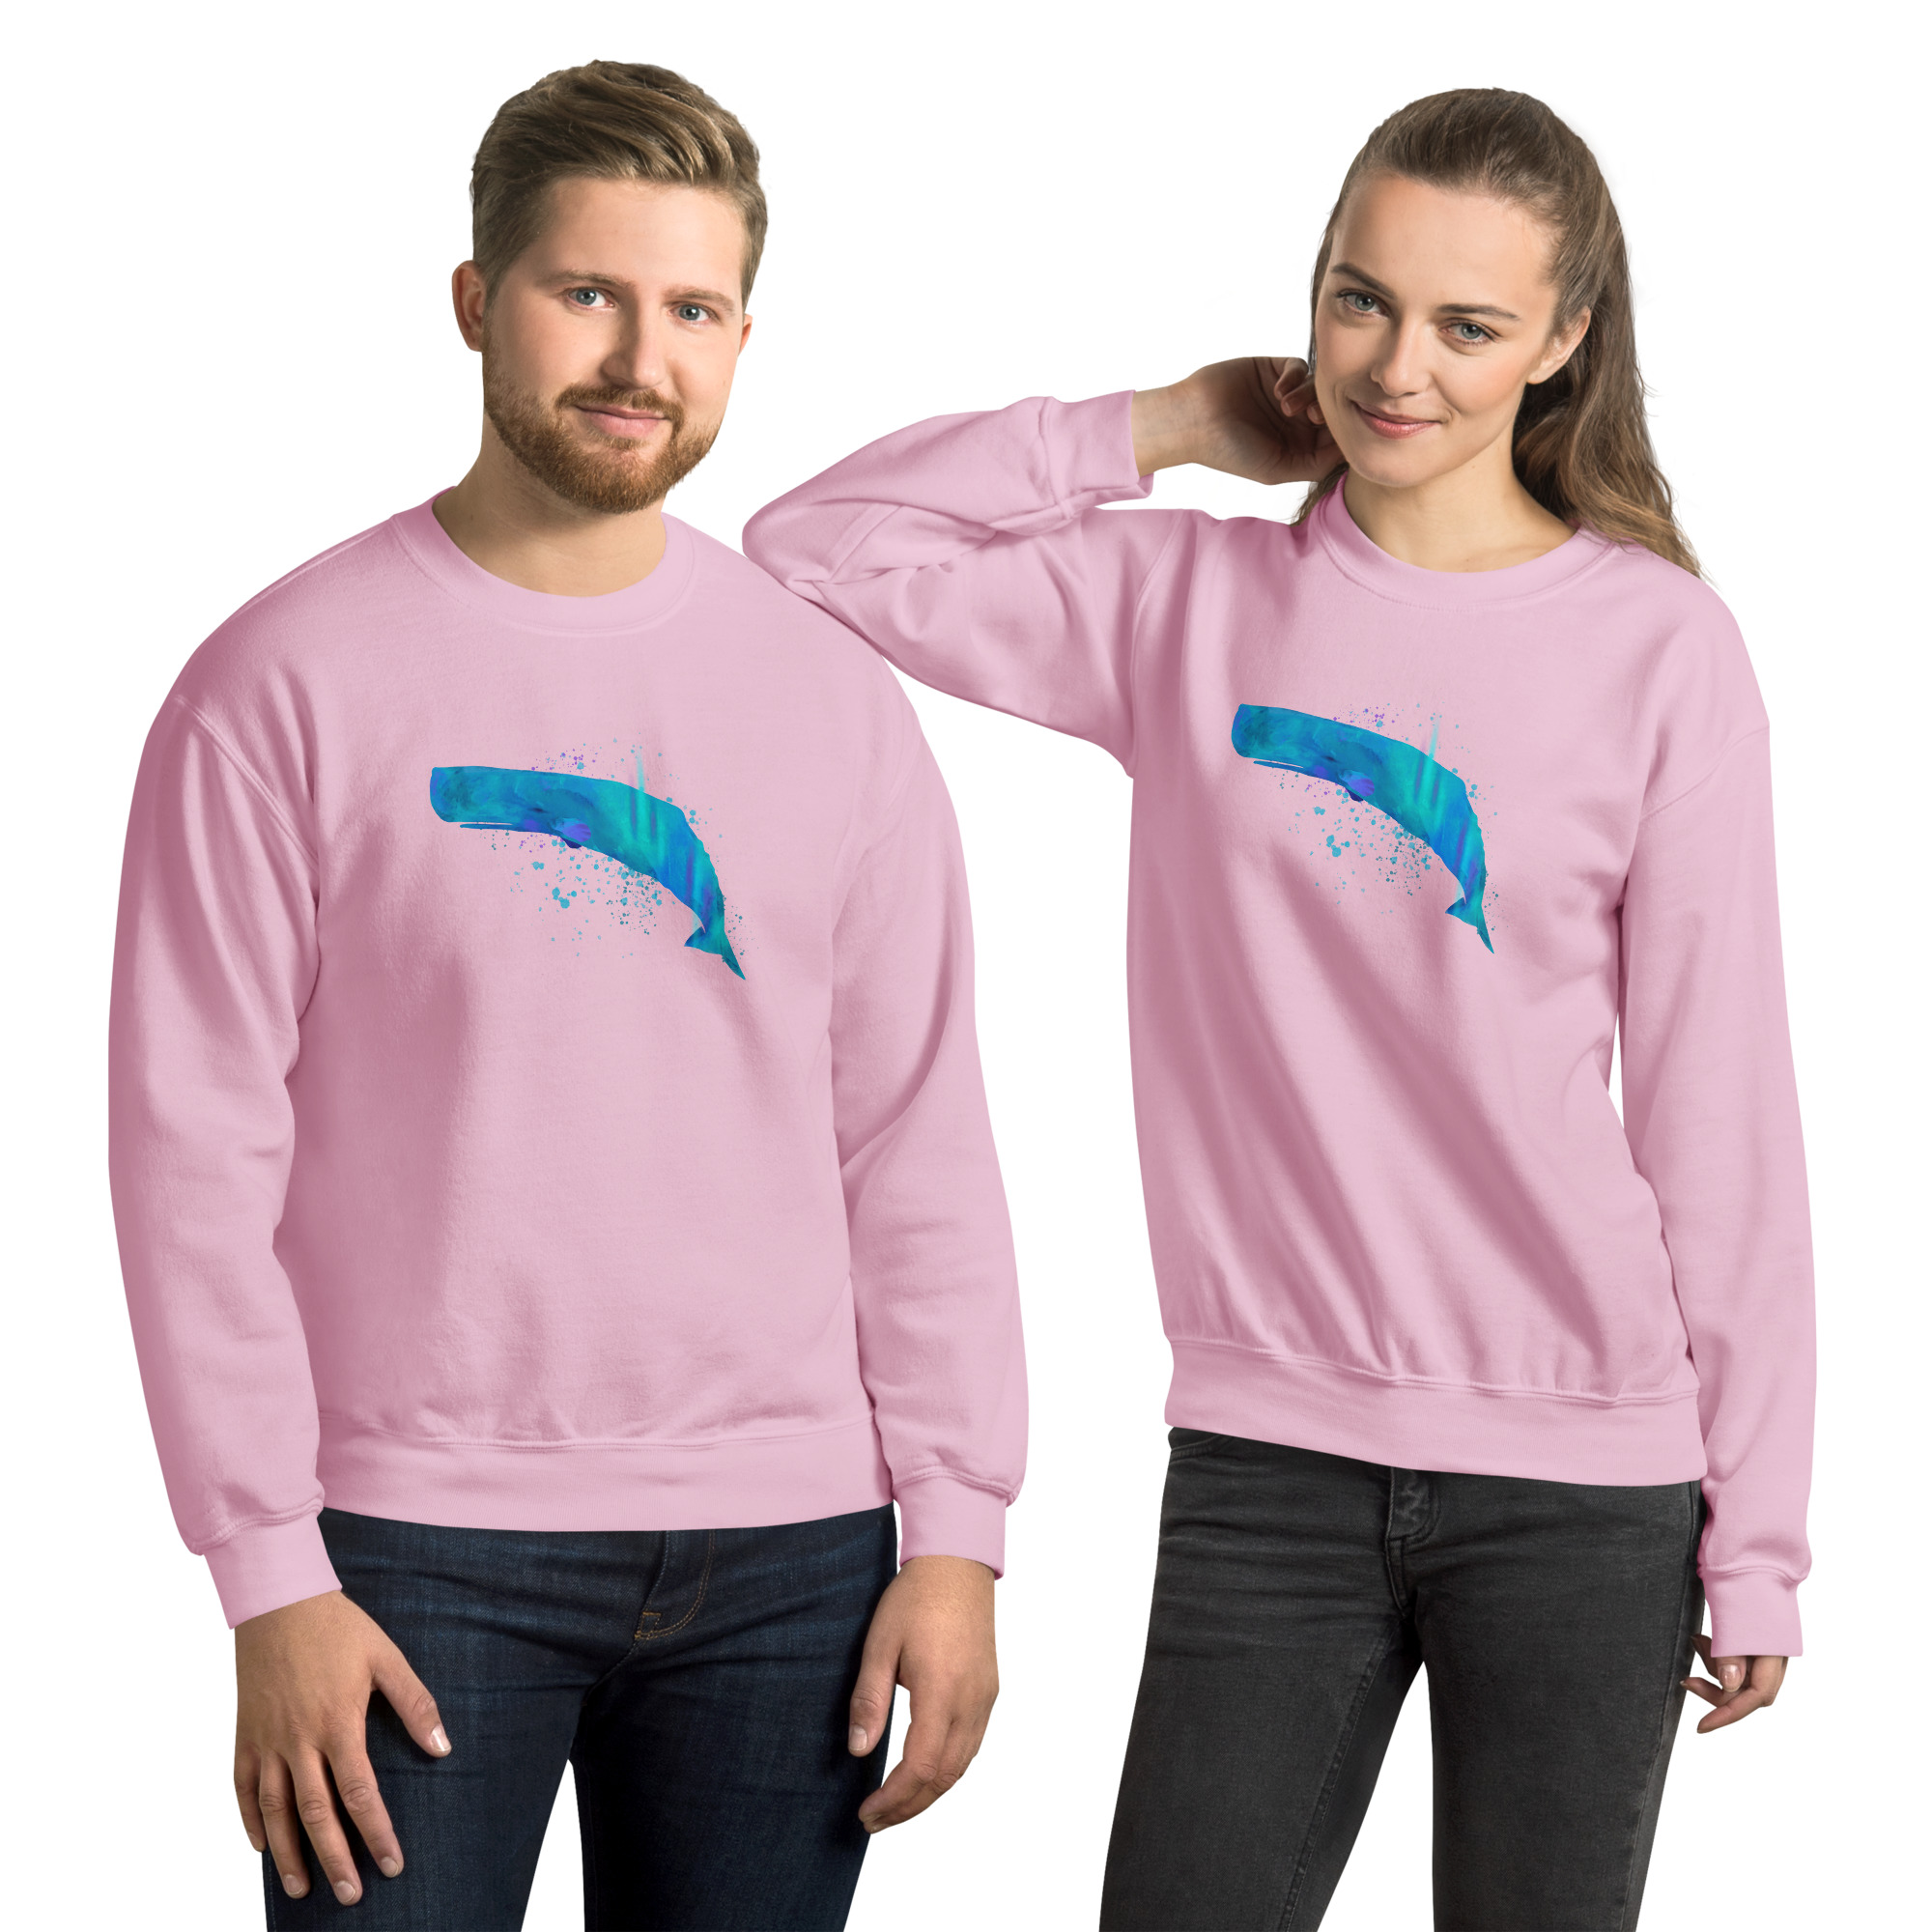 Sweatshirt Le Cachalot du Grand Bleu - rose